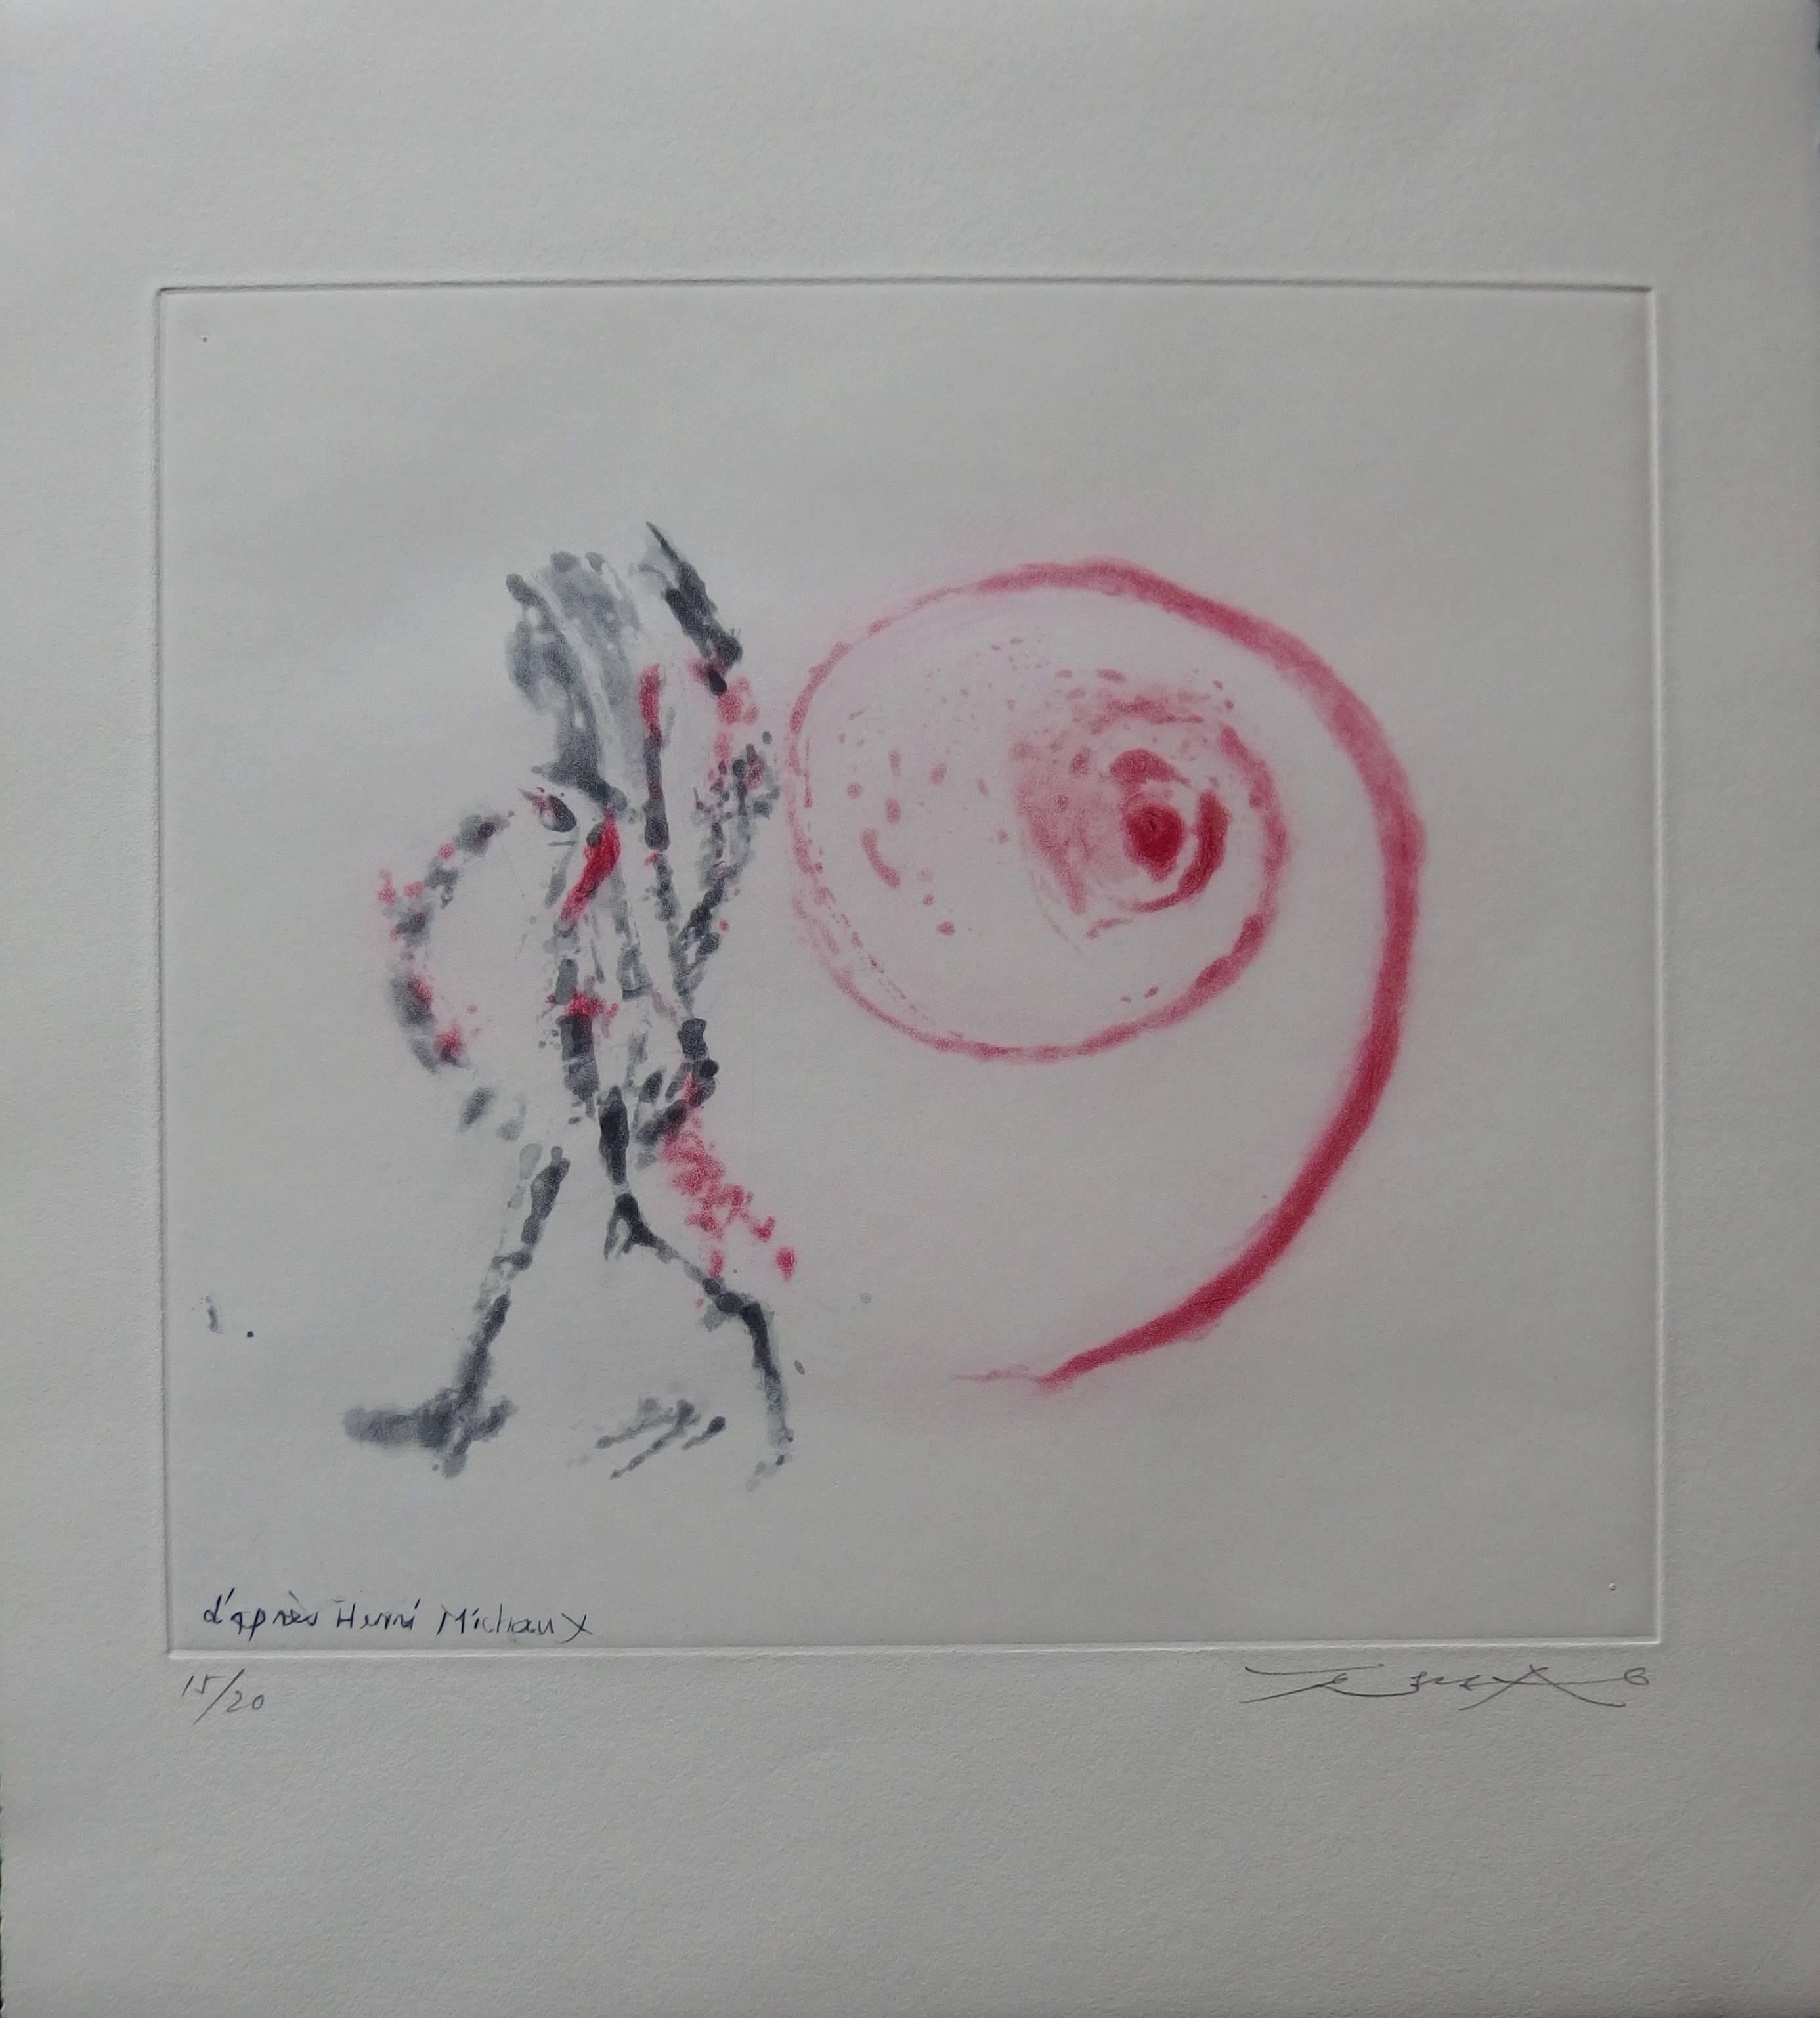 Zao Wou-Ki Abstract Print - Movement - Original handsigned etching and aquatint - 20 copies